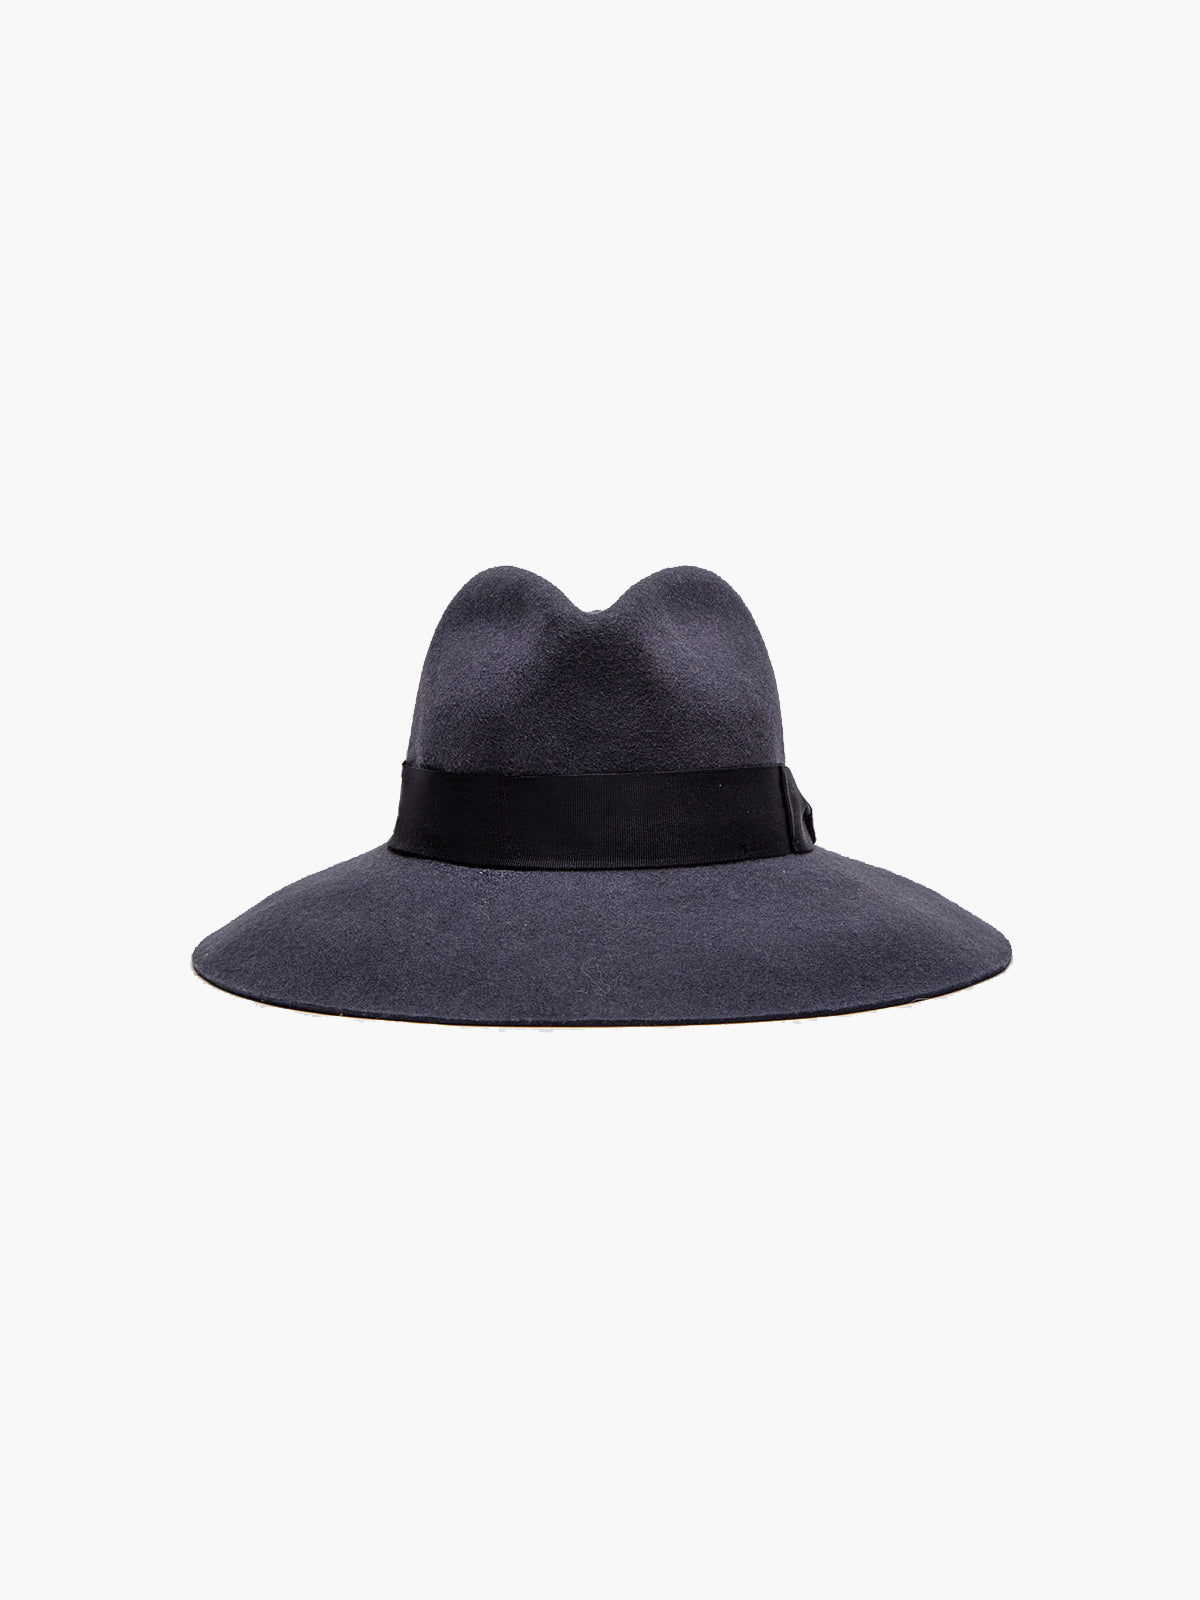 Felt Shade Hat | Charcoal - Fashionkind